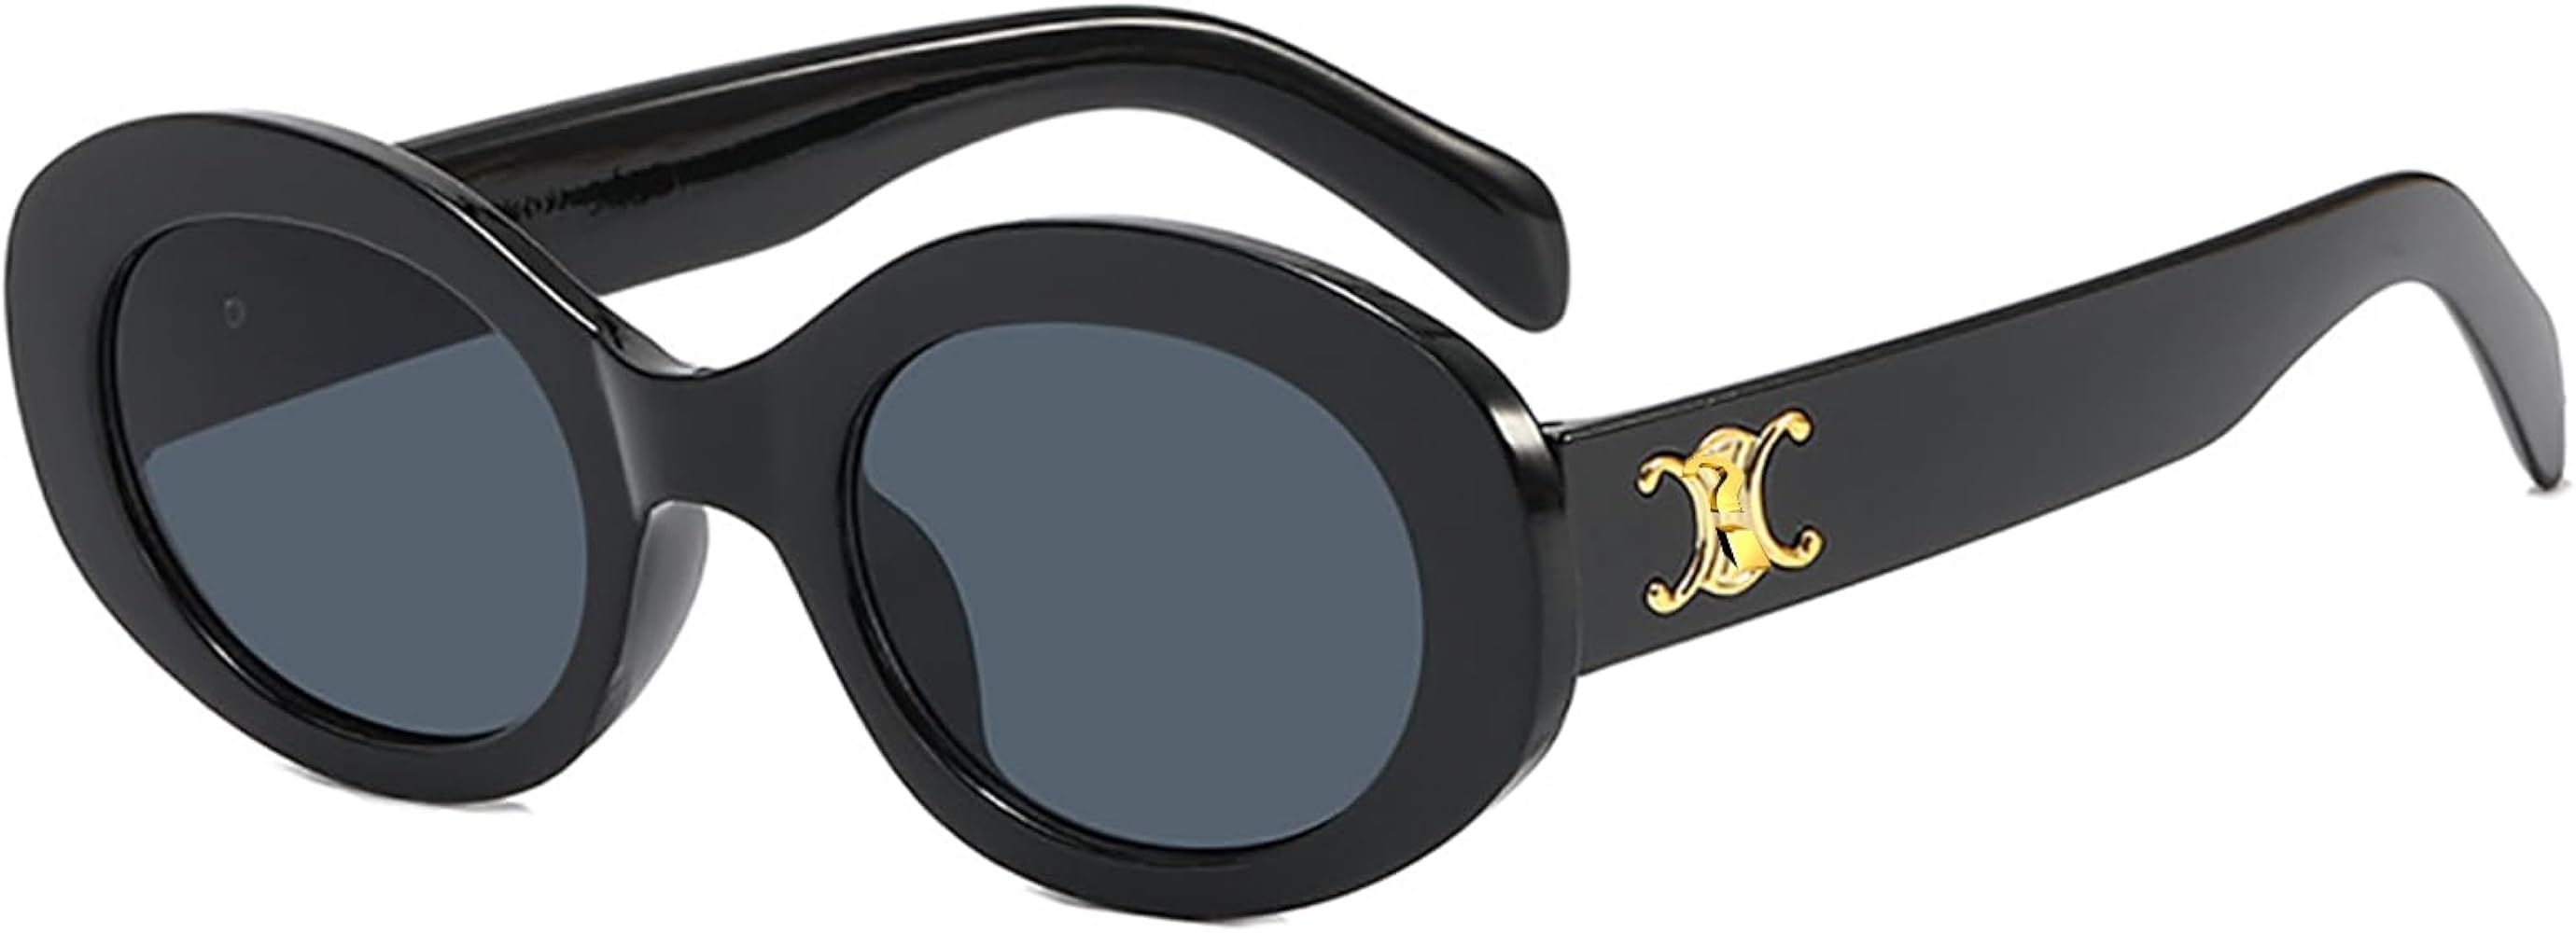 Sunglasses Womens Sunglasses Y2k Unisex Square Trendy Shades Retro Fashion Vintage Protection Sun... | Amazon (US)